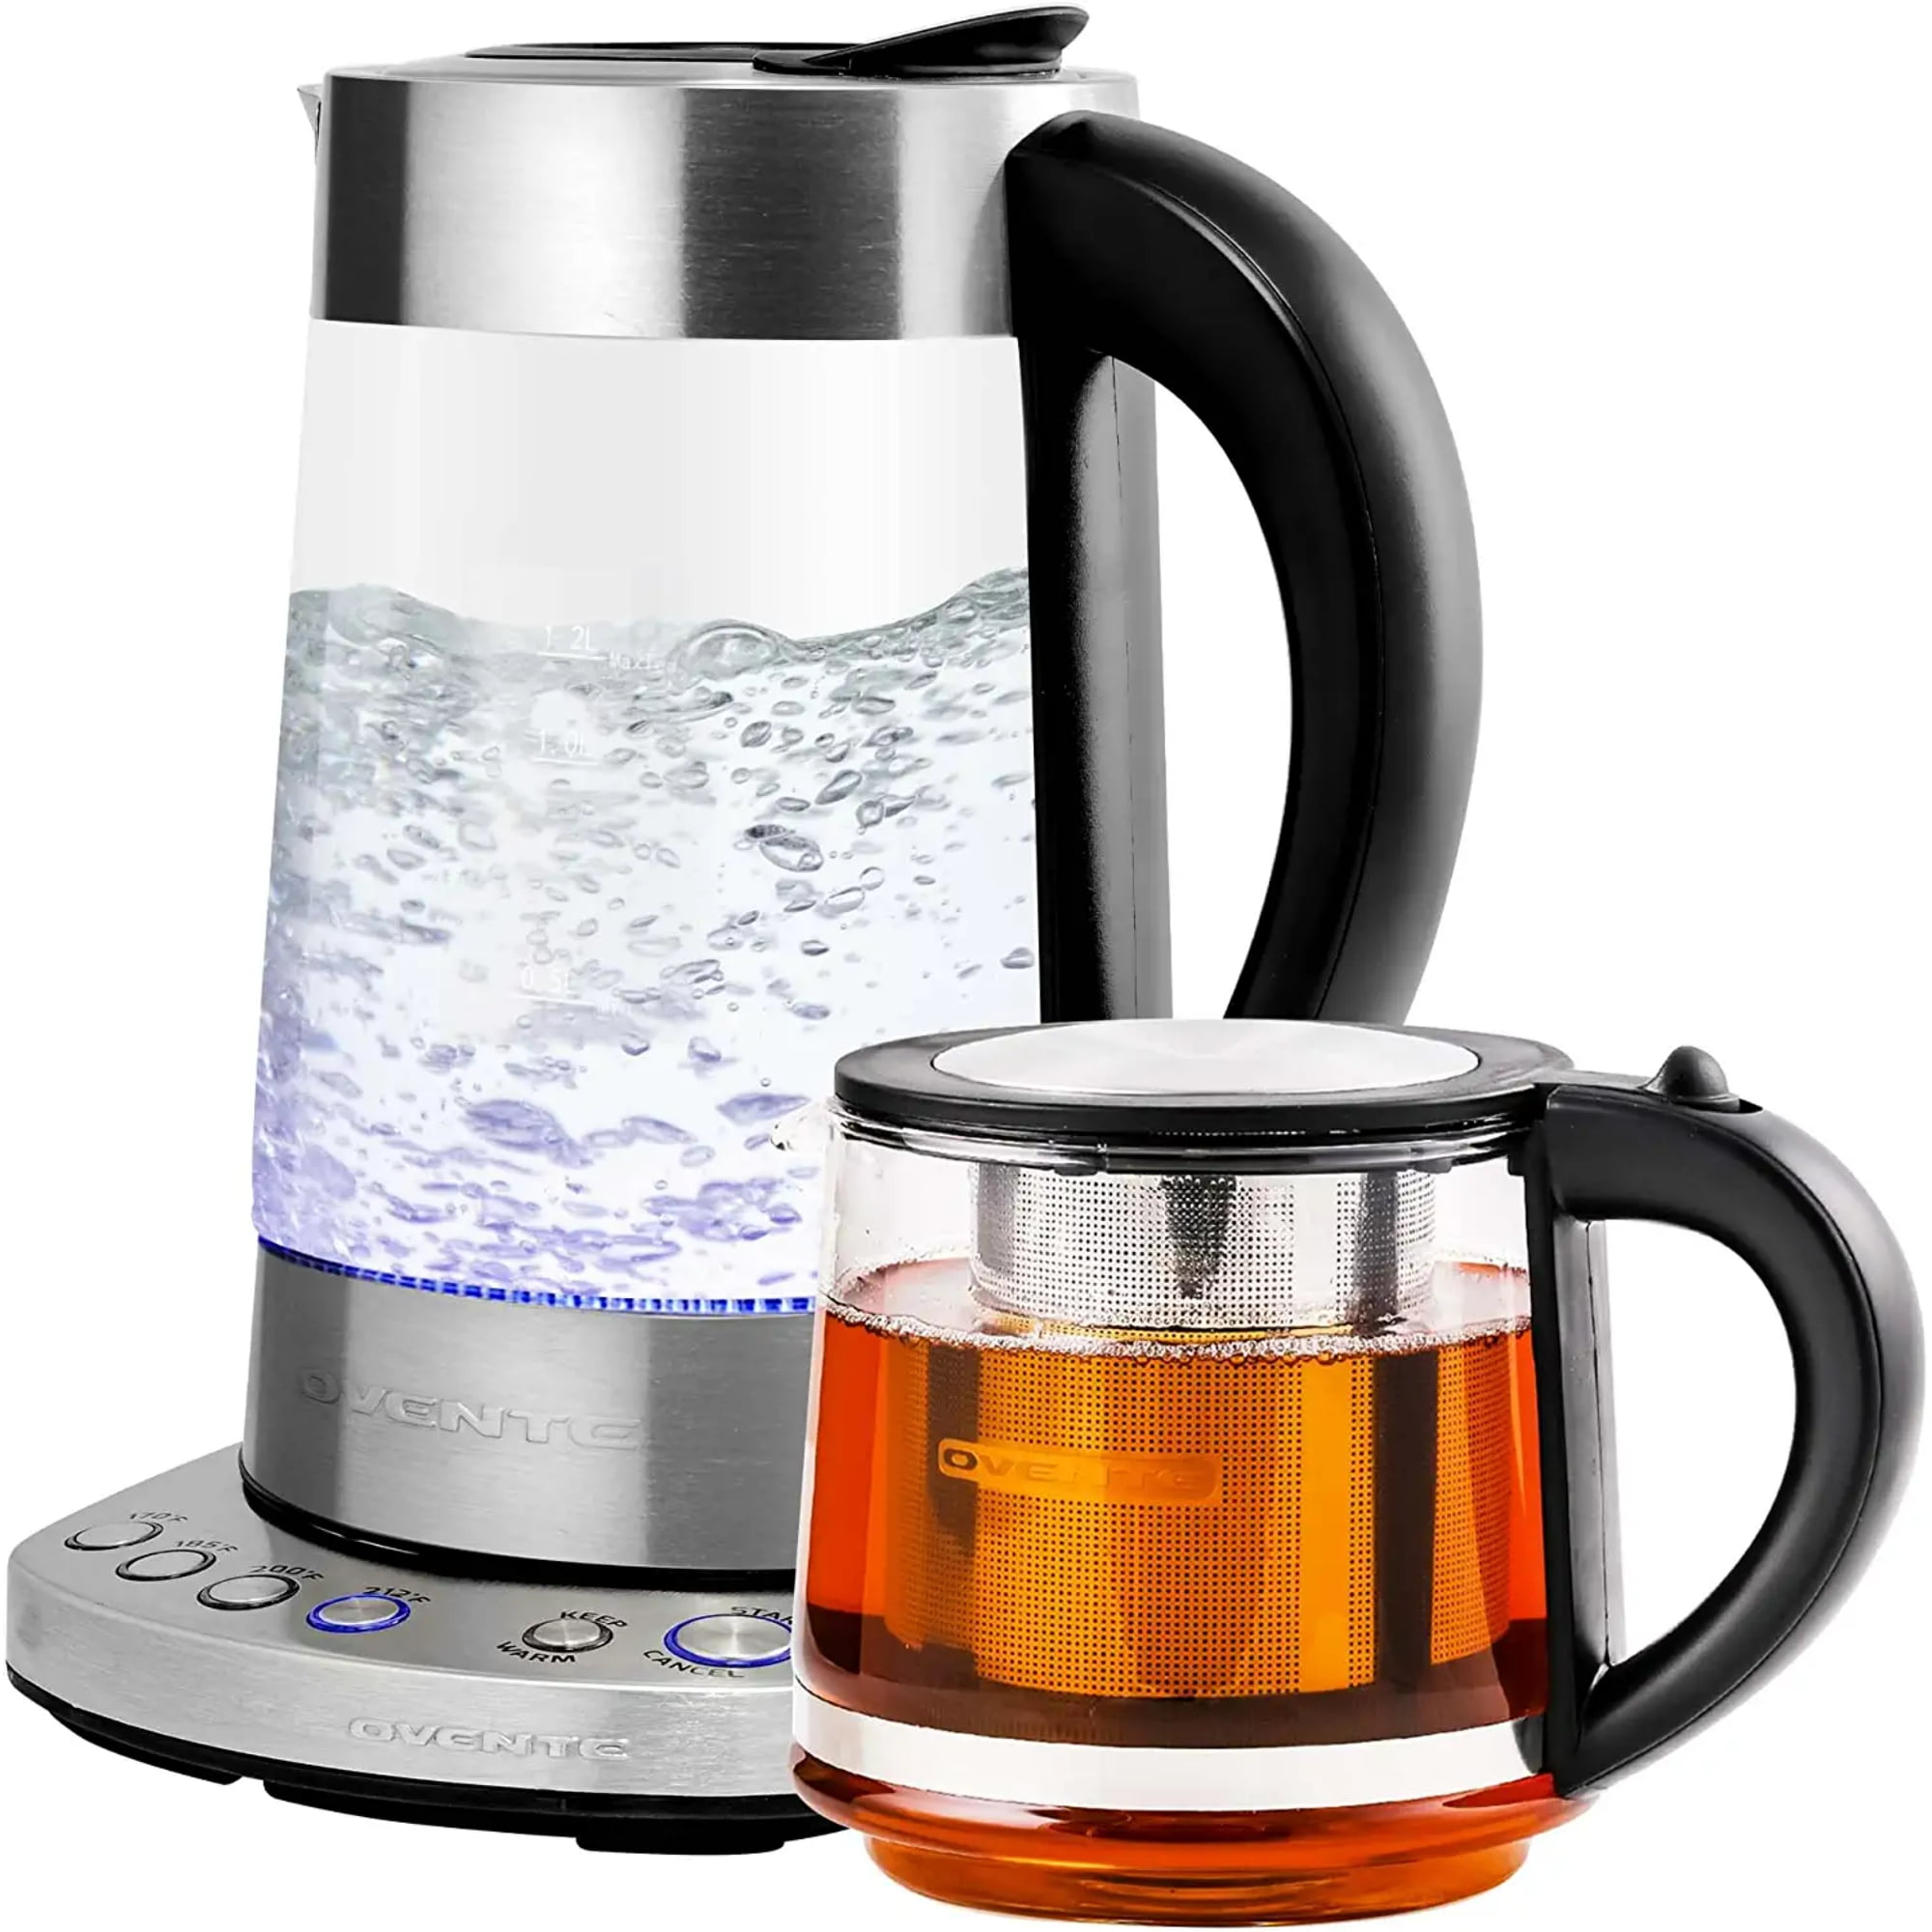 the Tea Maker™ Compact